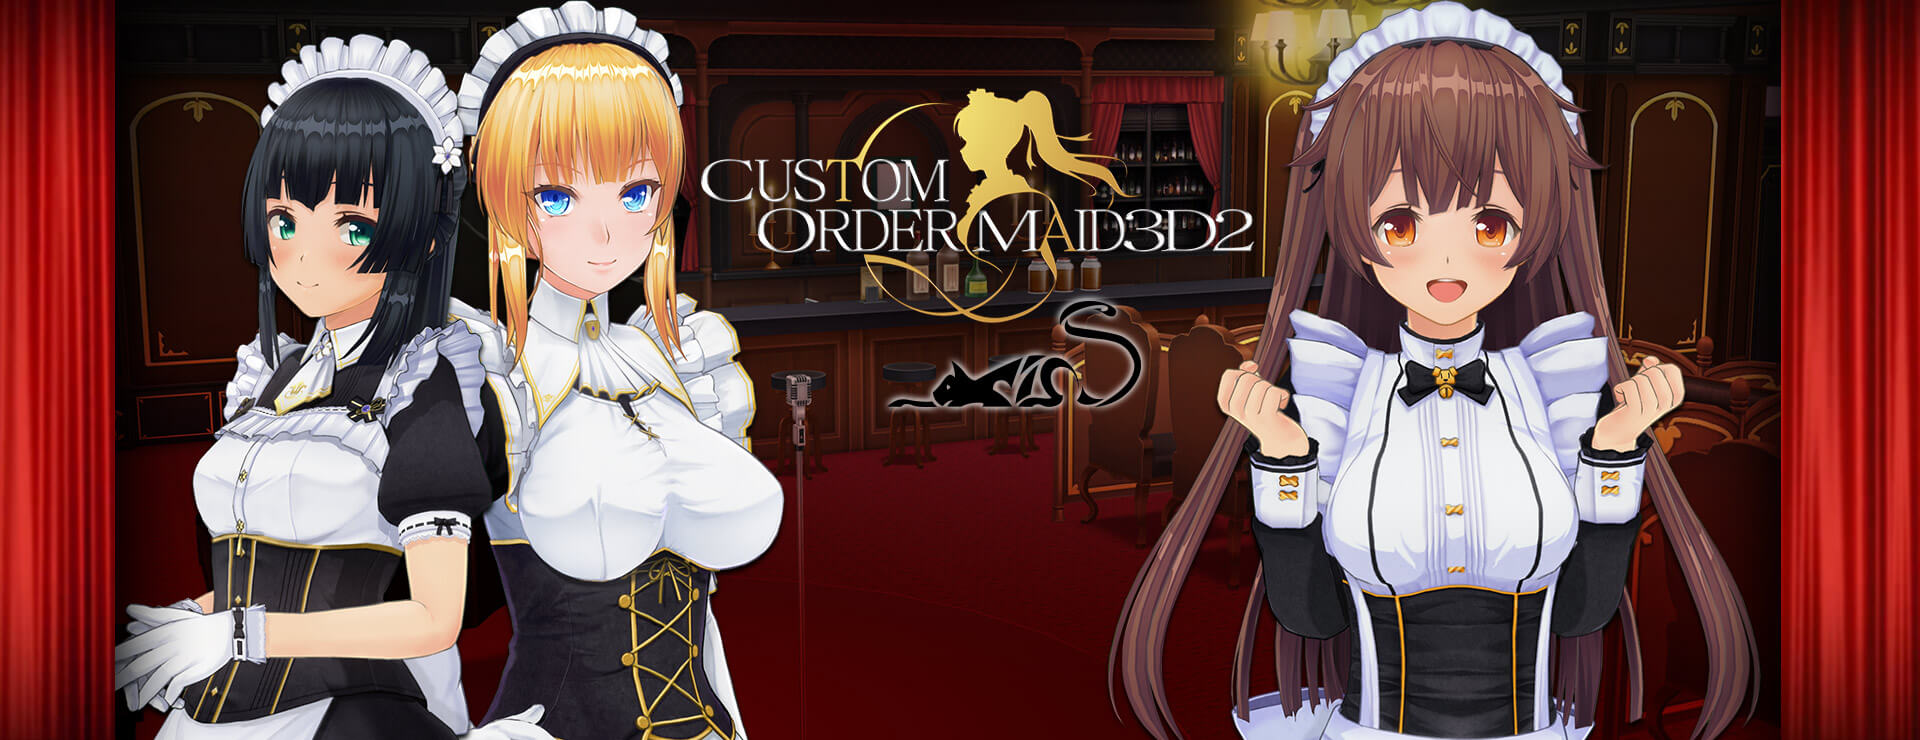 Custom Order Maid 3D2 Enjoy Empire Life GP-01 Bundle - シミュレーション ゲーム